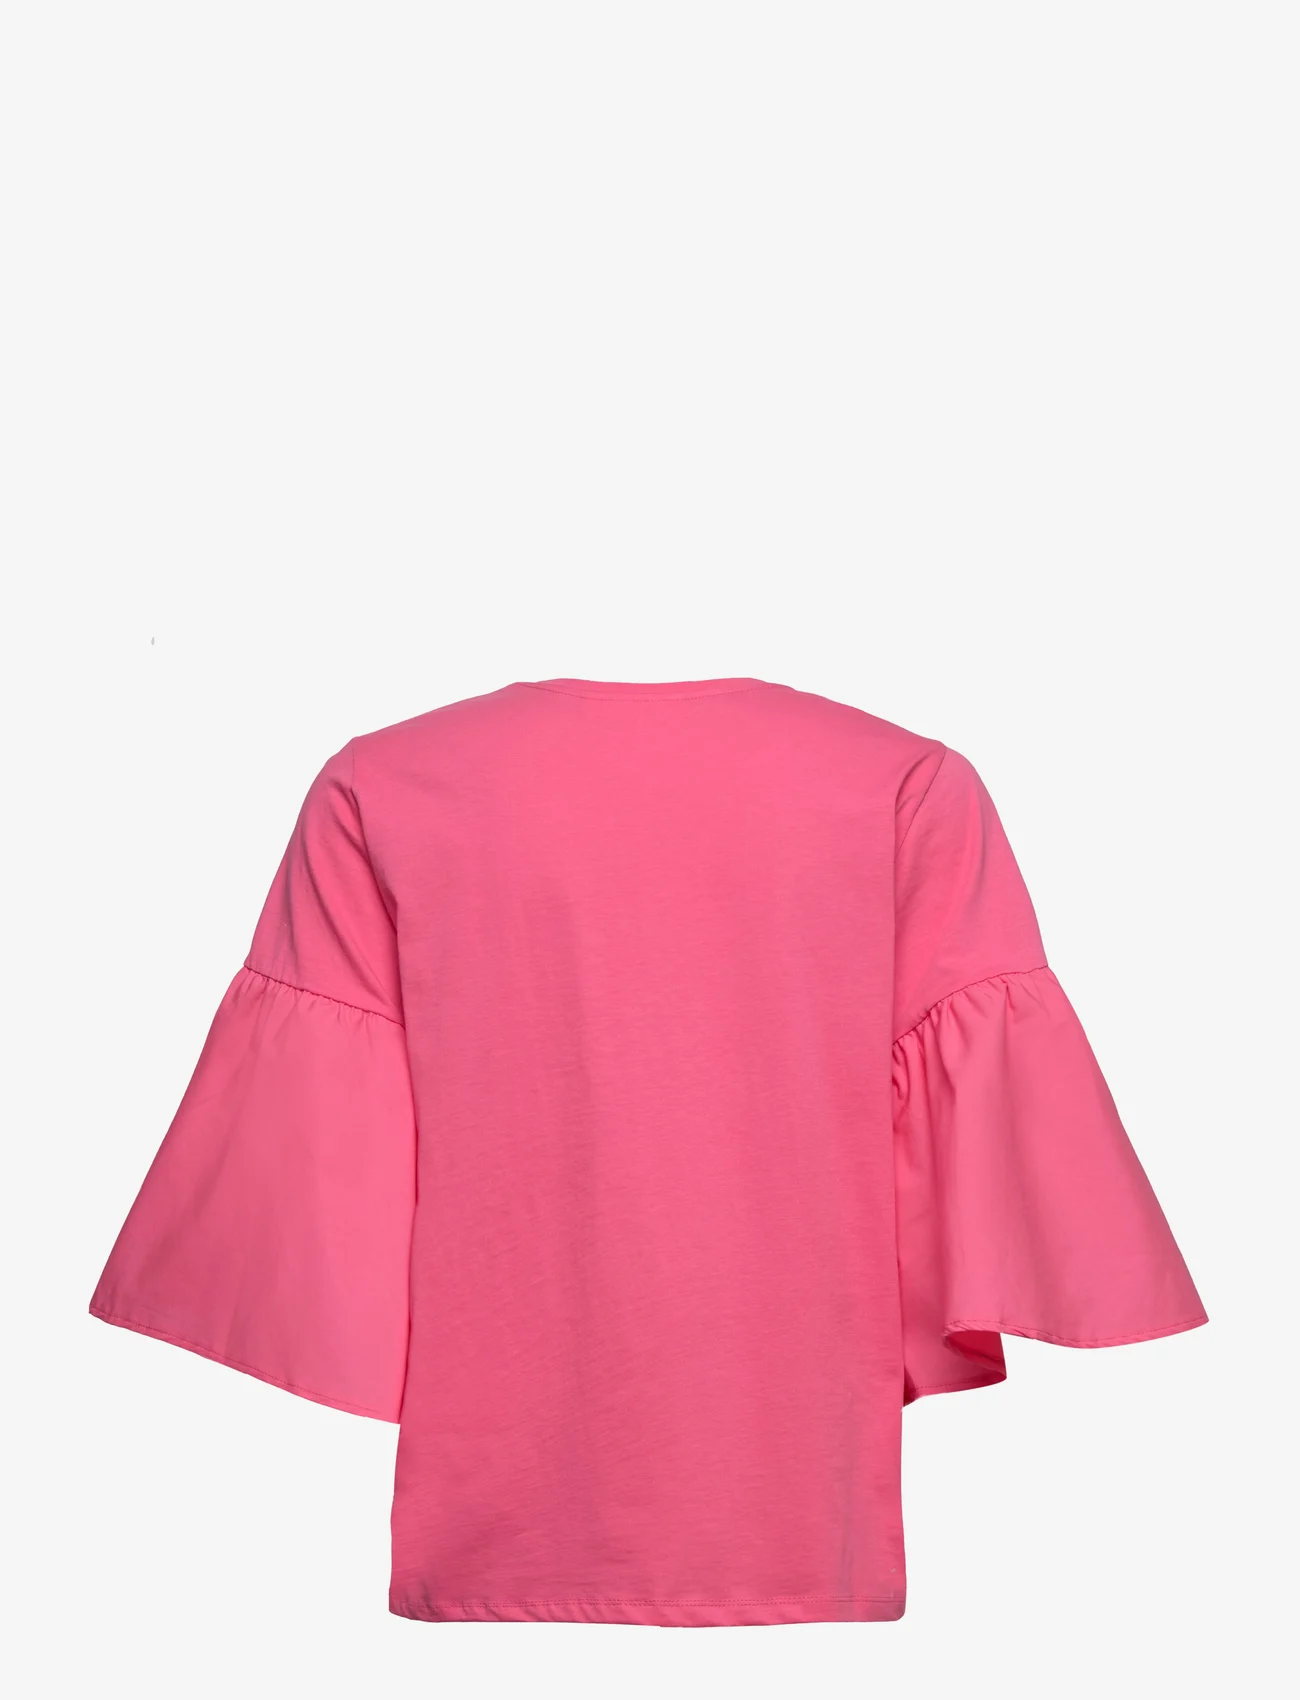 InWear - VumeIW Top - t-shirts - pink rose - 1